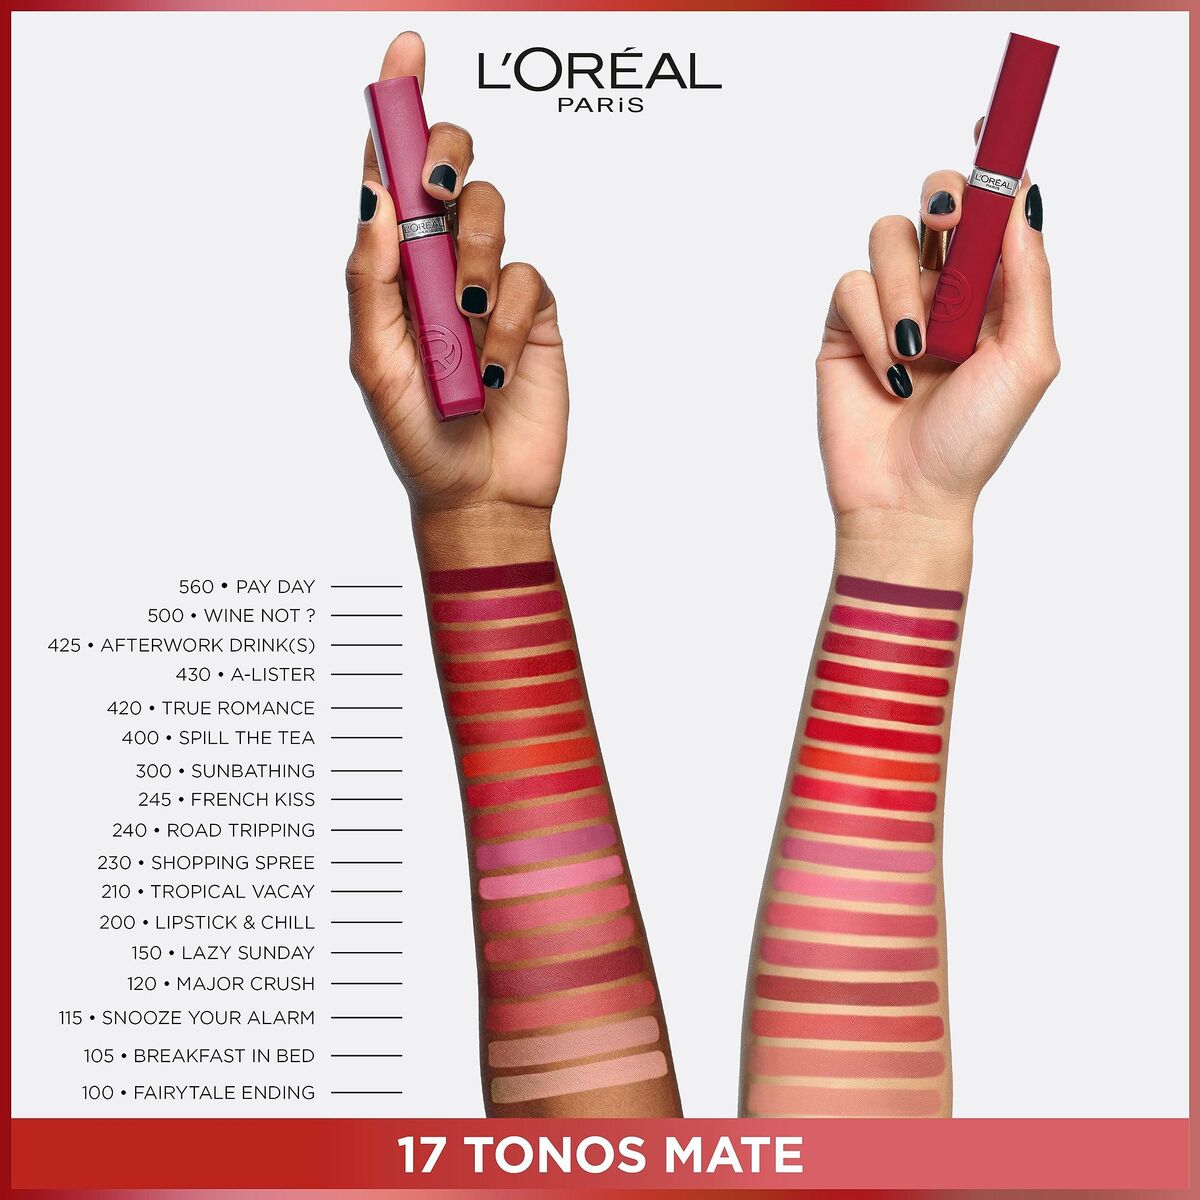 Lipgloss L'Oreal Make Up Infaillible Matte Resistance True Romance Nº 420 (1 Stück) - CA International  